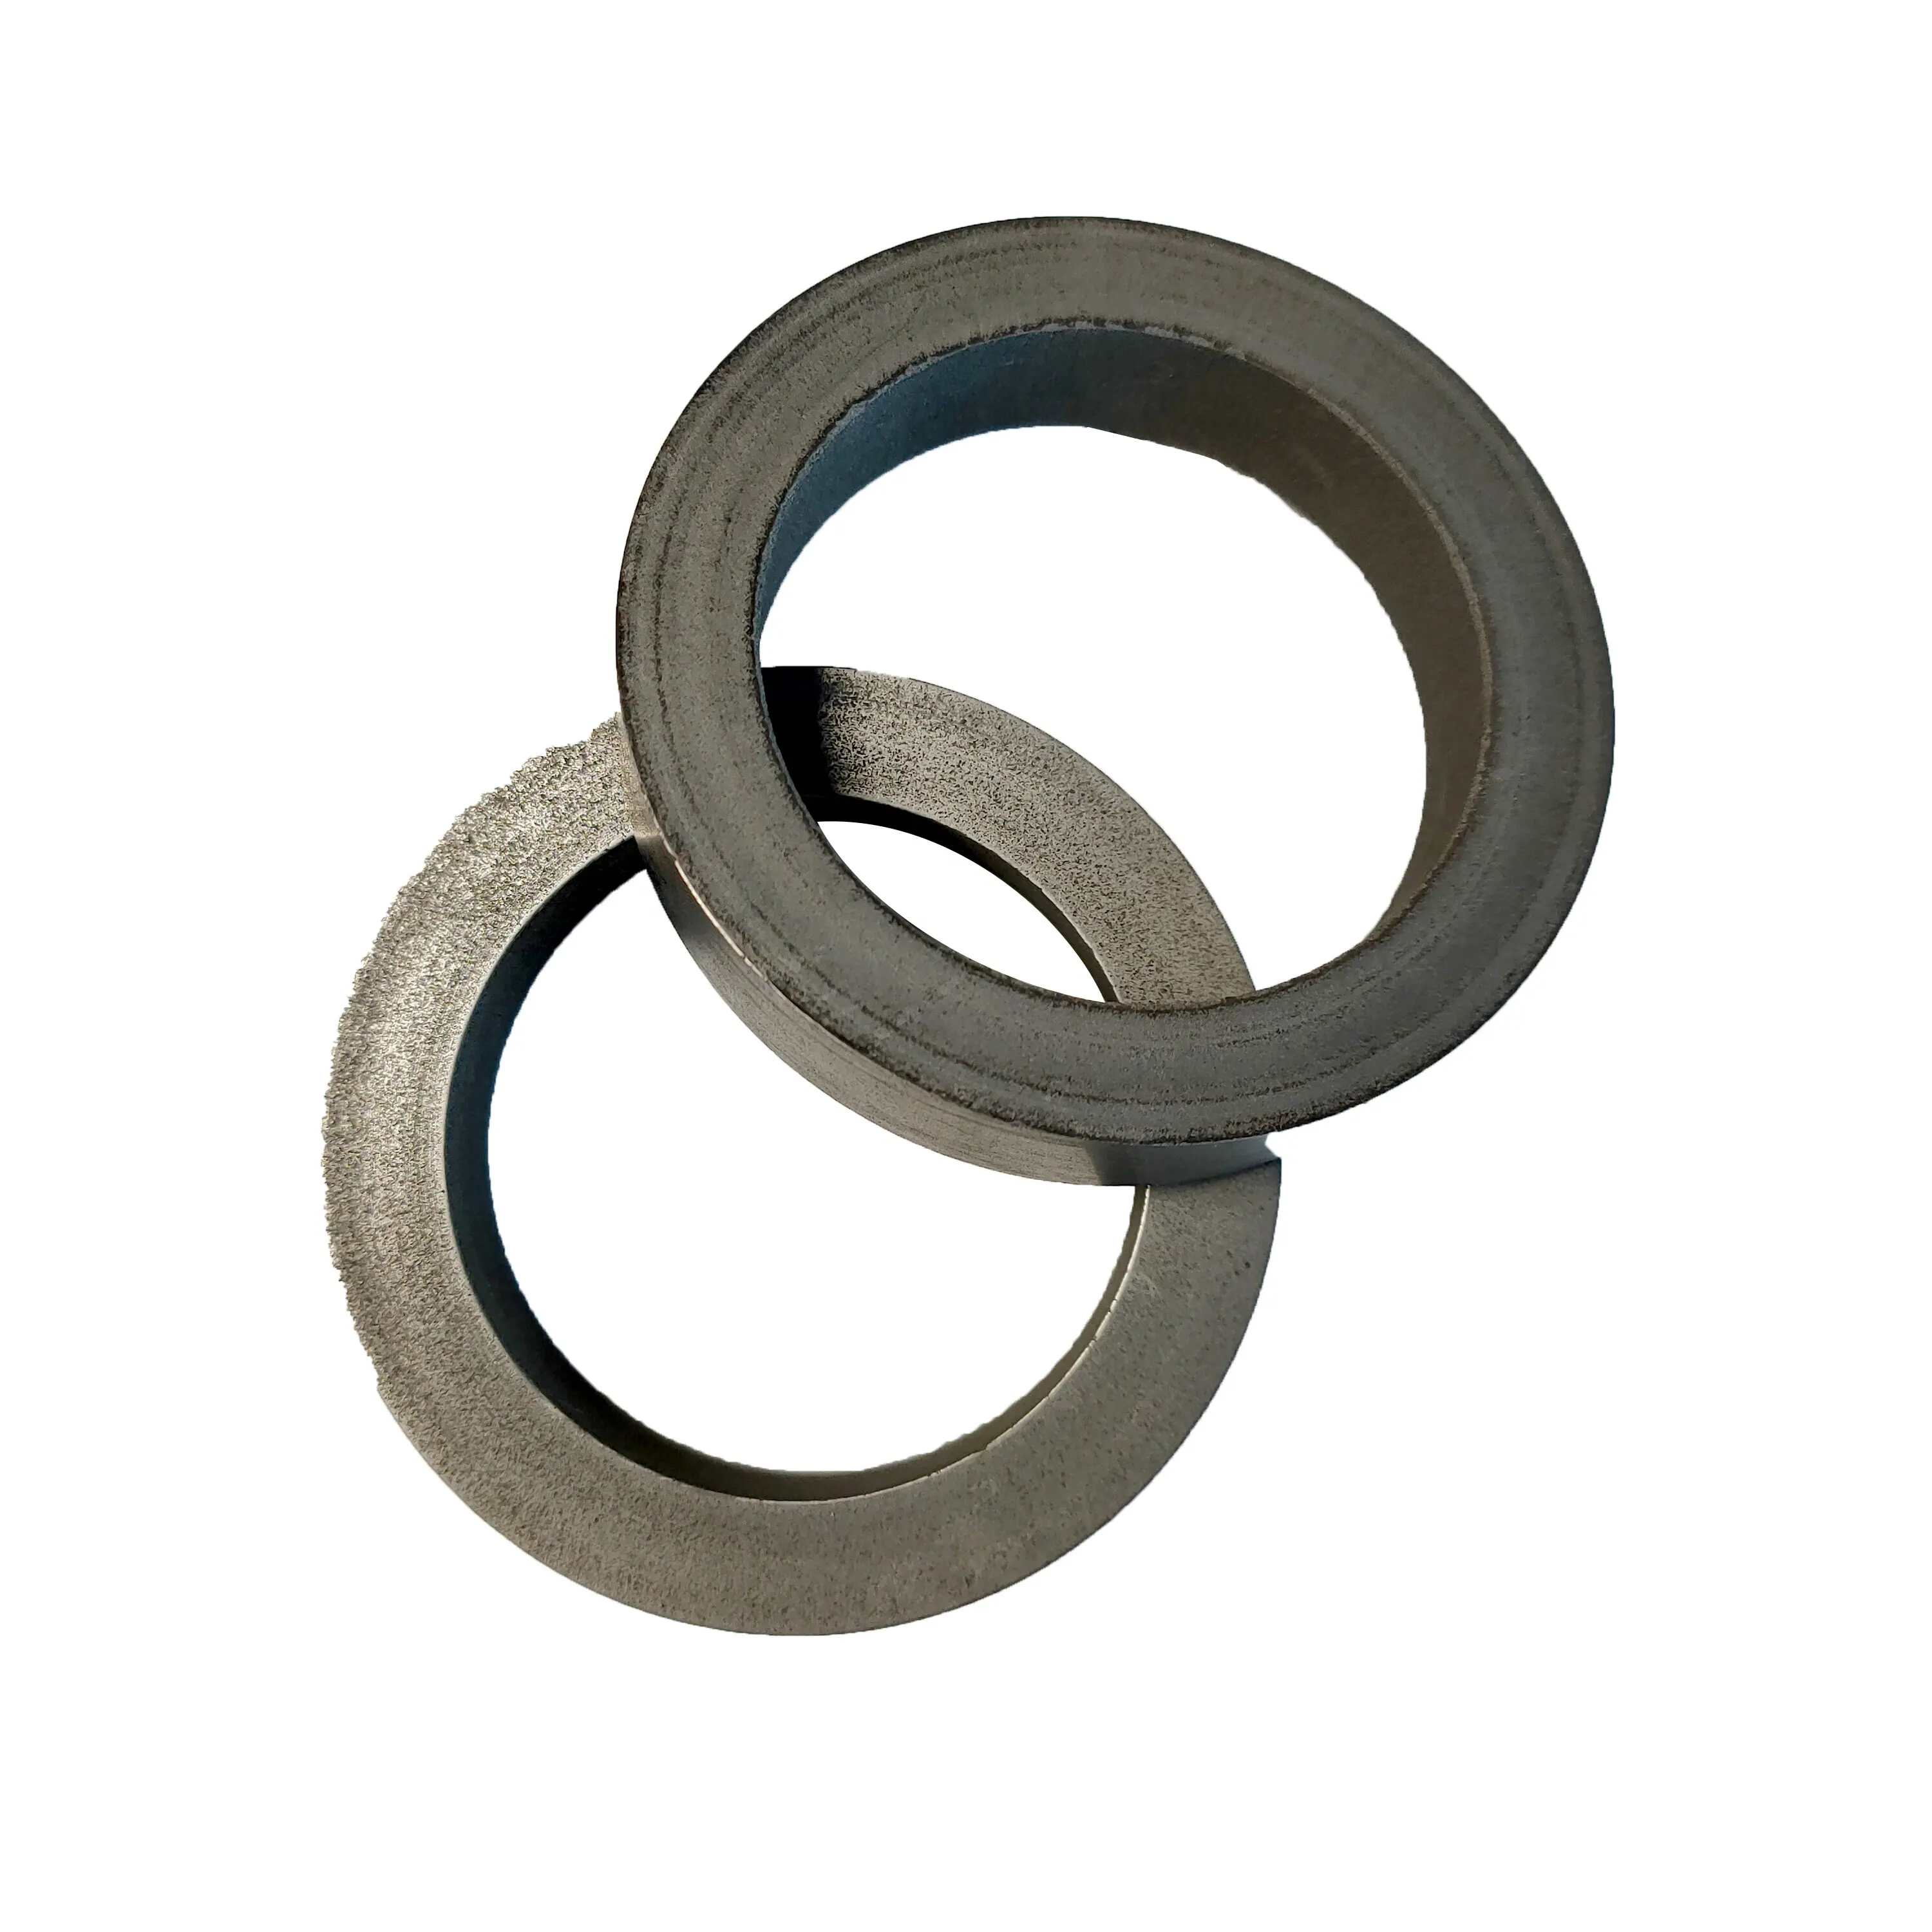 Flexible graphite packing ring, high-temperature resistant valve, graphite sealing gasket, self seal